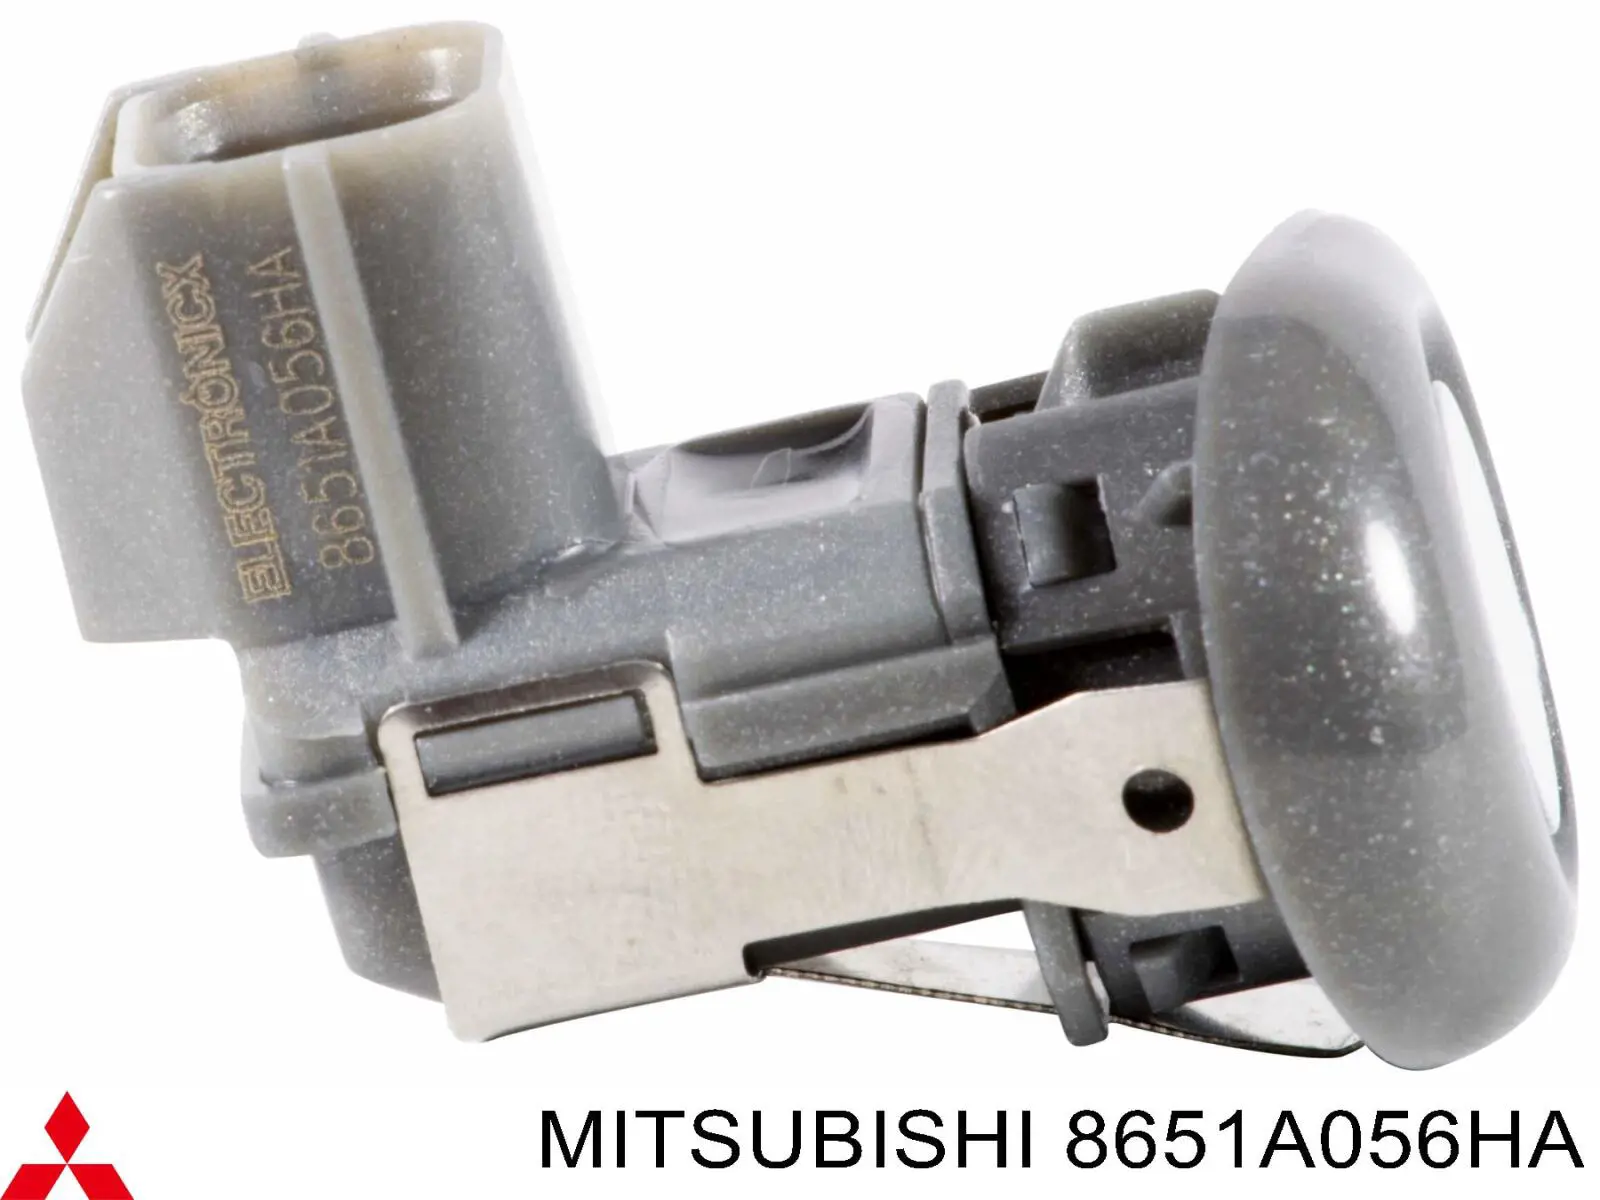 8651A056HA Mitsubishi sensor traseiro de sinalização de estacionamento (sensor de estacionamento)